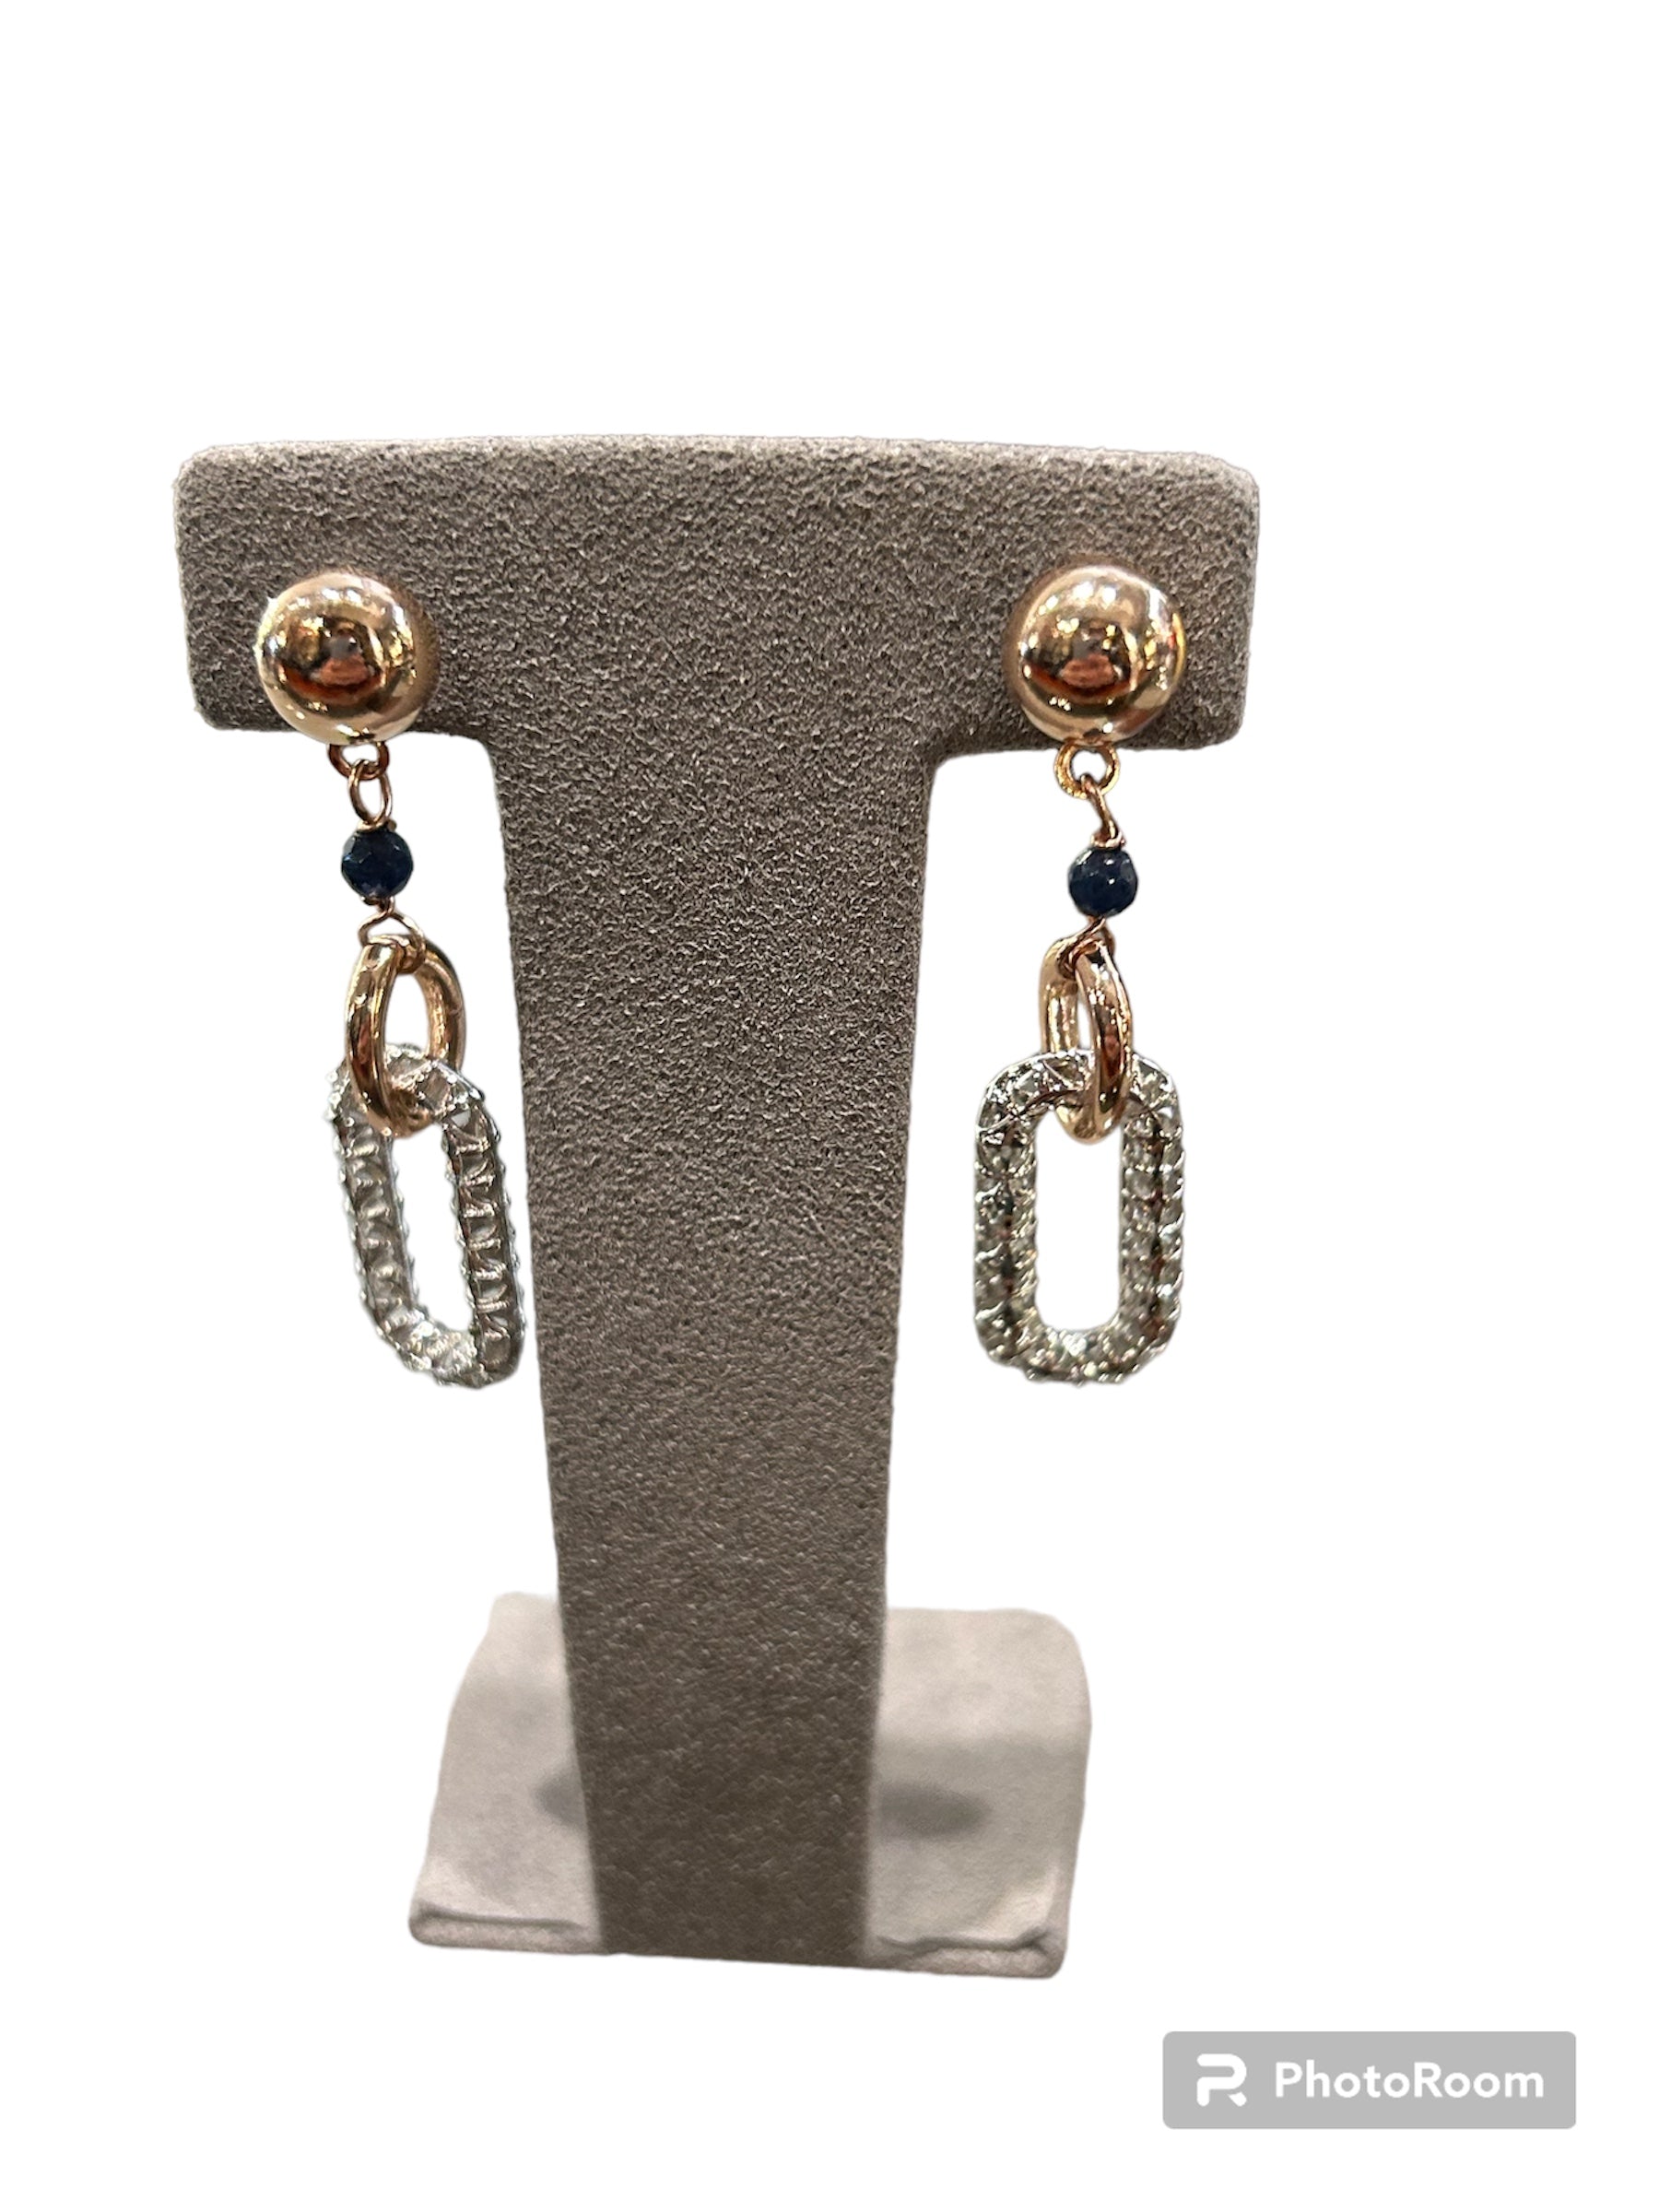 Rose bronze earrings with stones - CAPRI OR 023